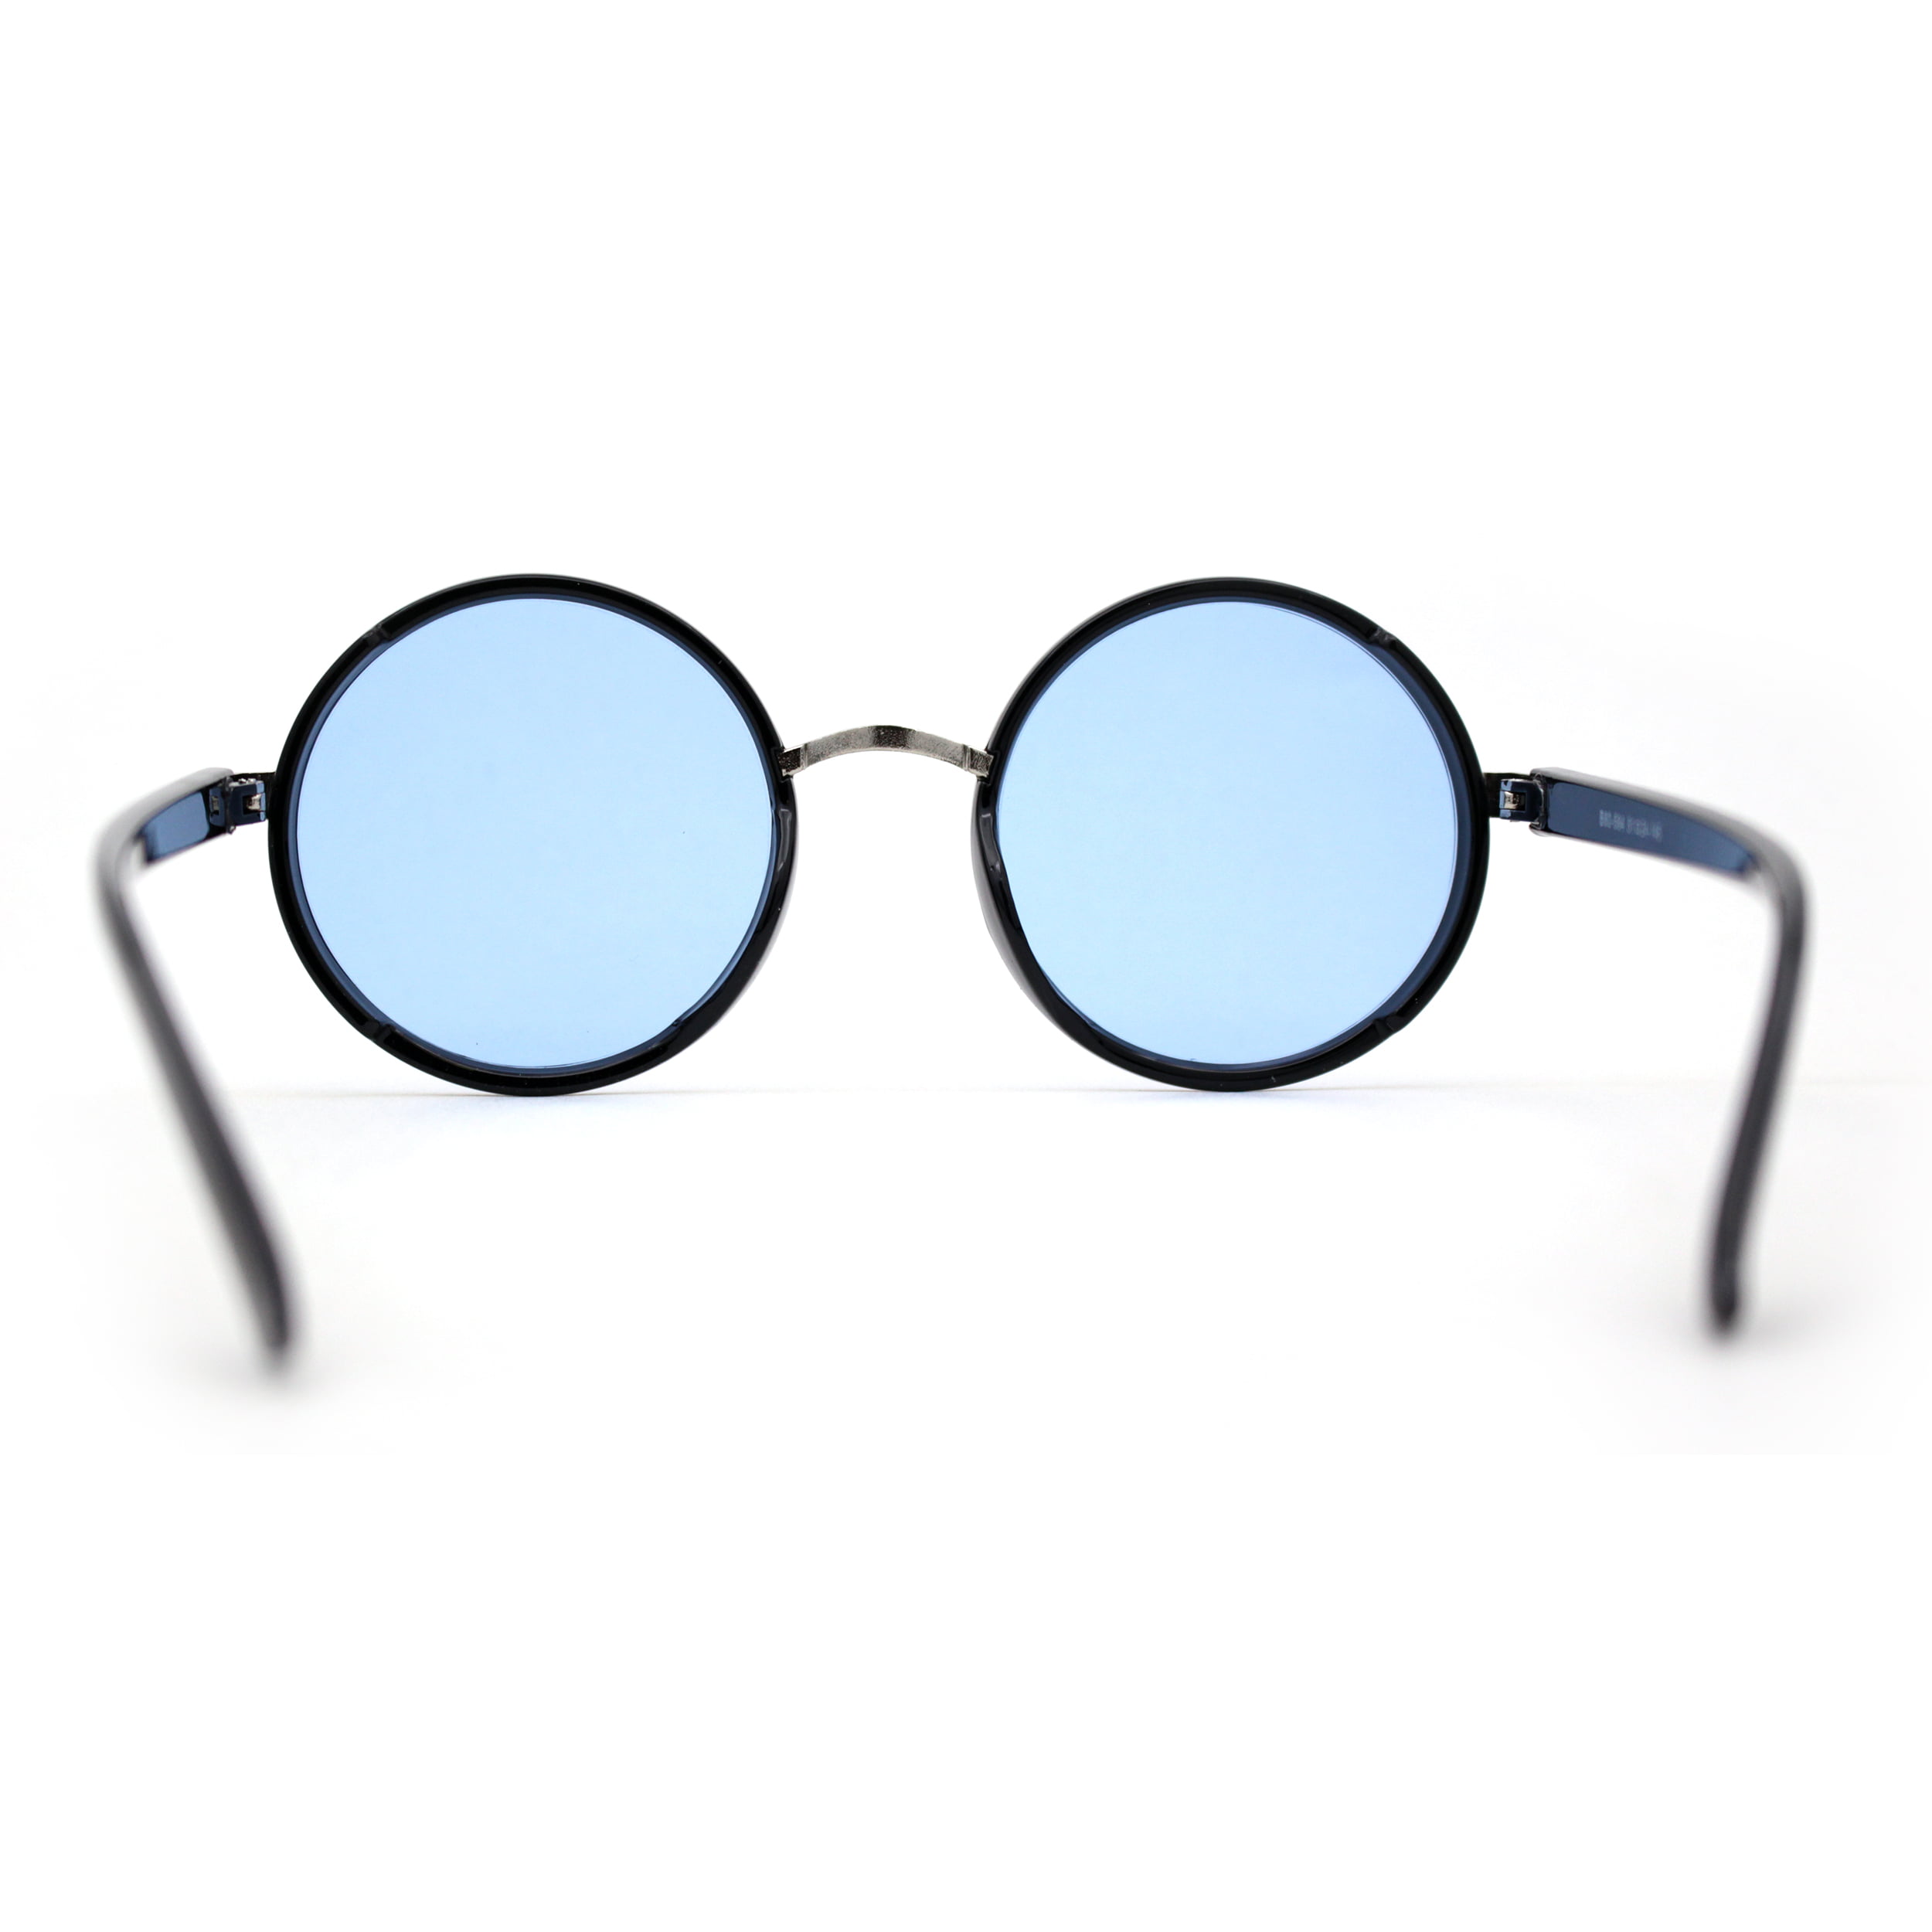 Double Rim Glitter Arm Wizard Circle Lens Round Sunglasses Silver Black Blue